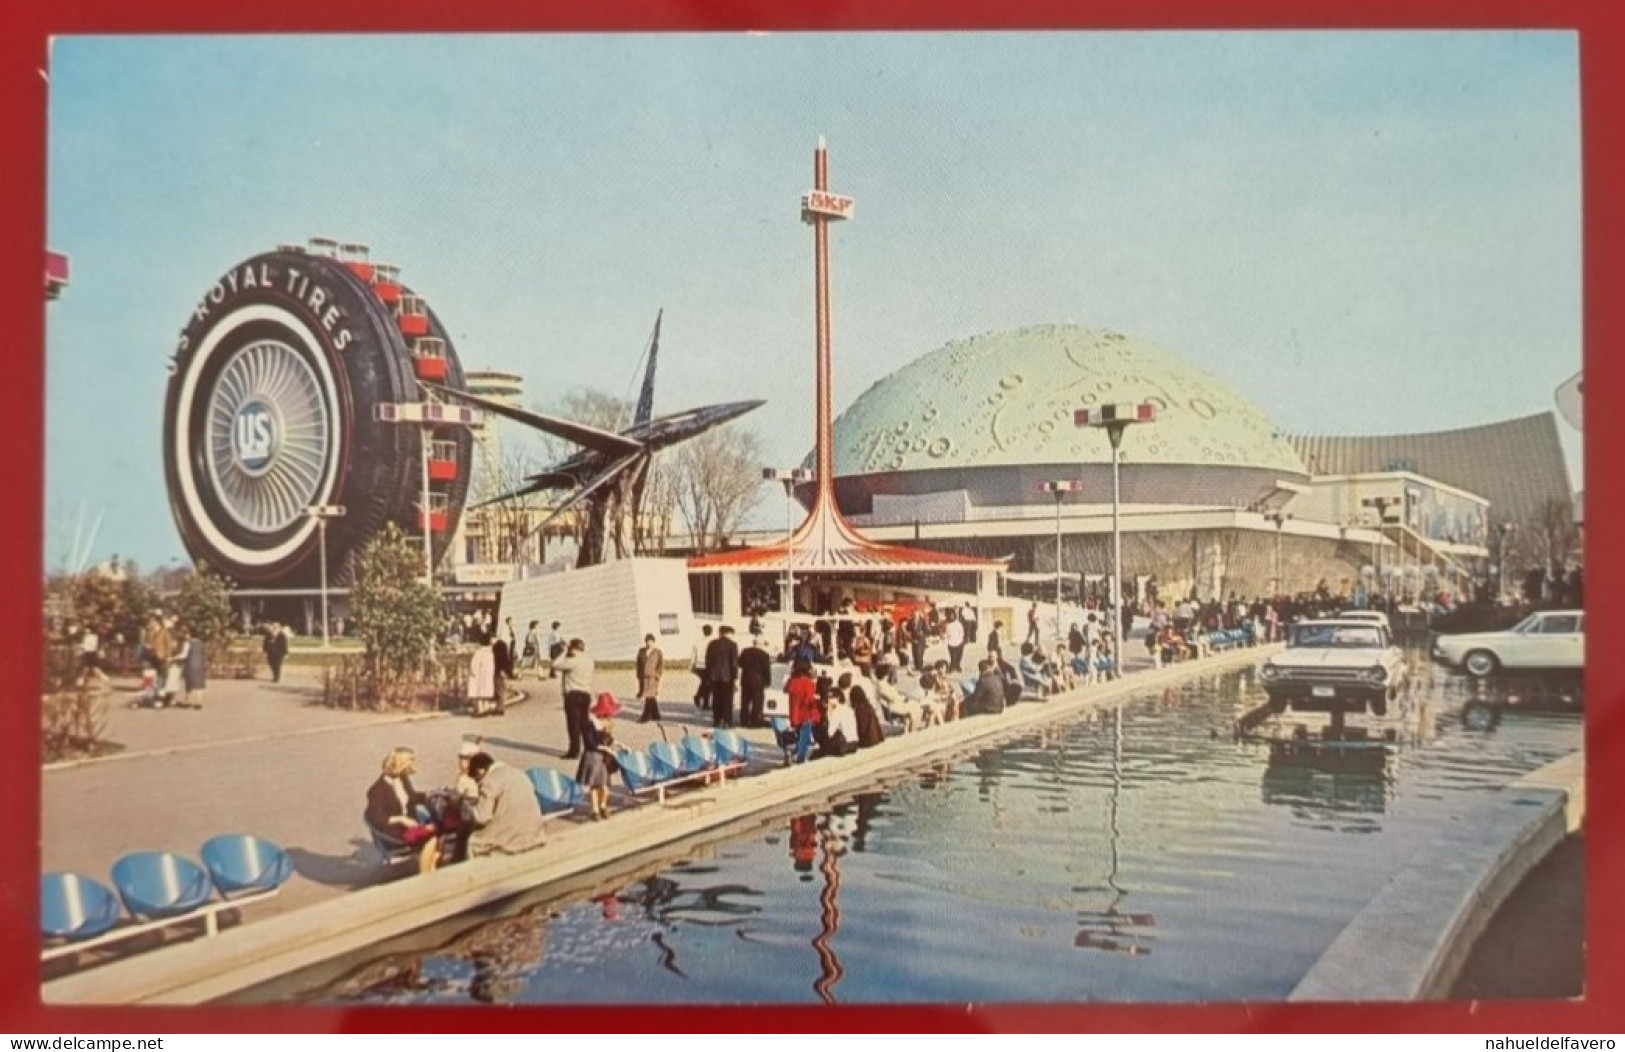 Uncirculated Postcard - USA - NY, NEW YORK WORLD'S FAIR 1964-65 - TRANSPORTATION AREA - Exhibitions